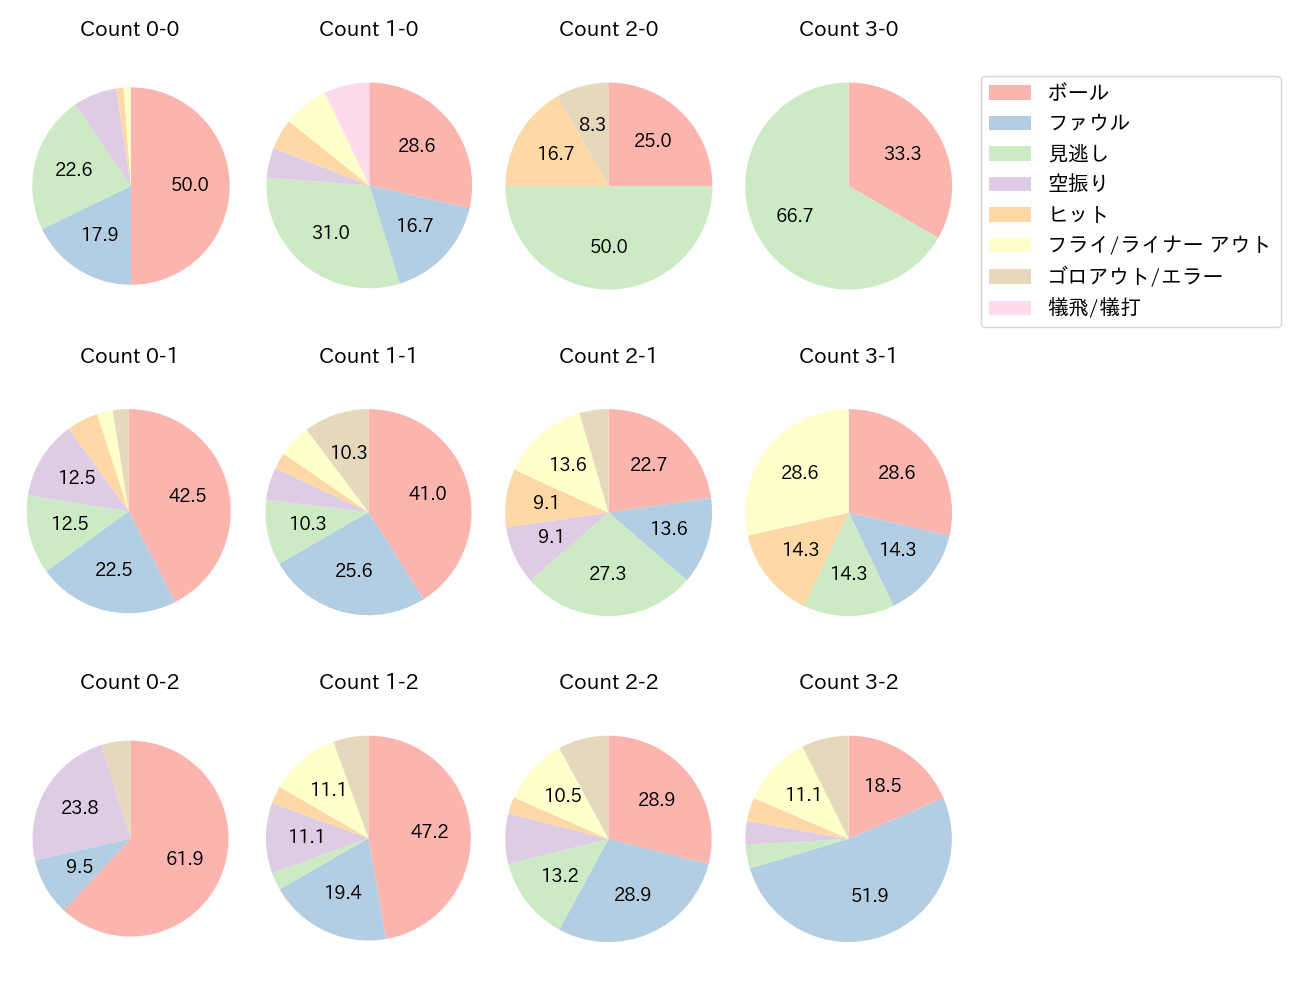 甲斐 拓也の球数分布(2021年6月)